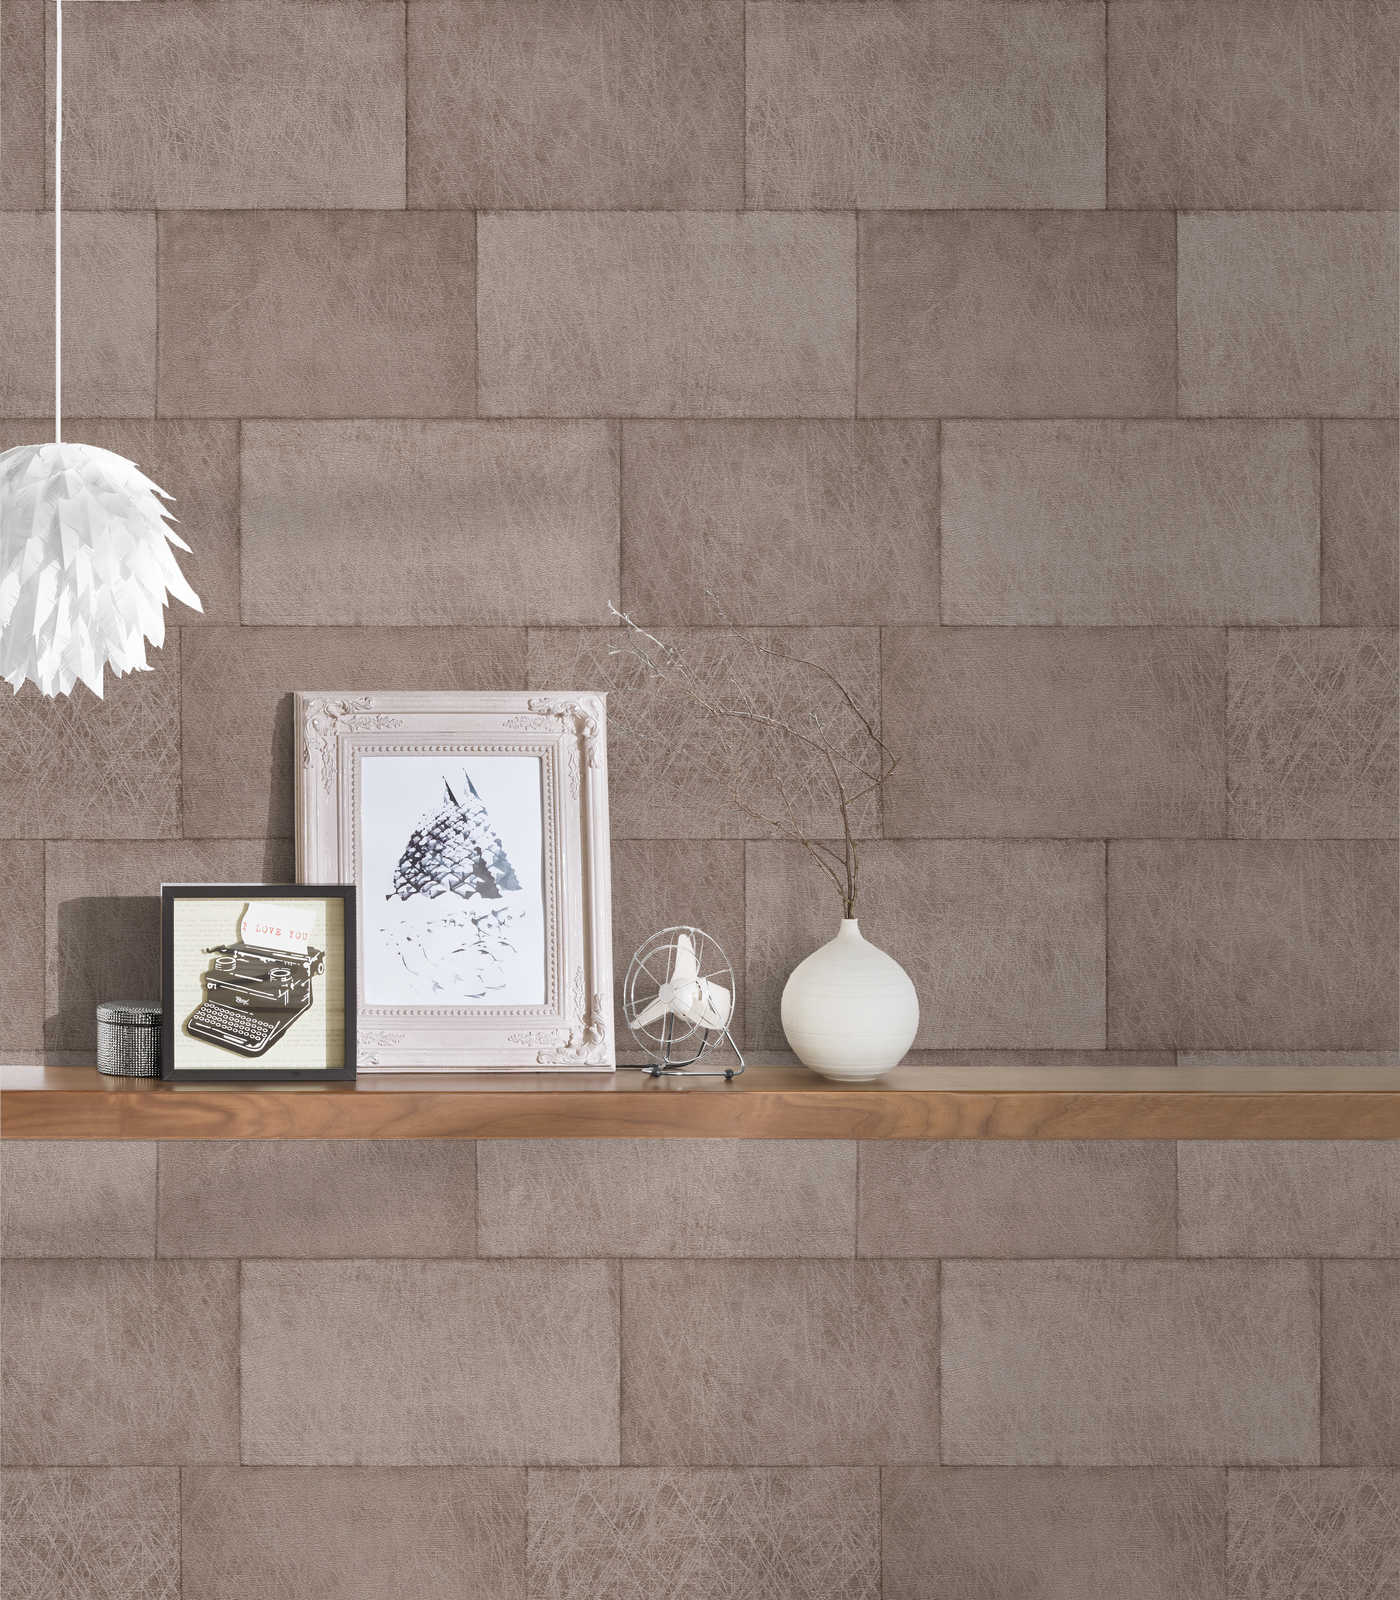             Non-woven wallpaper metallic design with tile pattern - brown
        